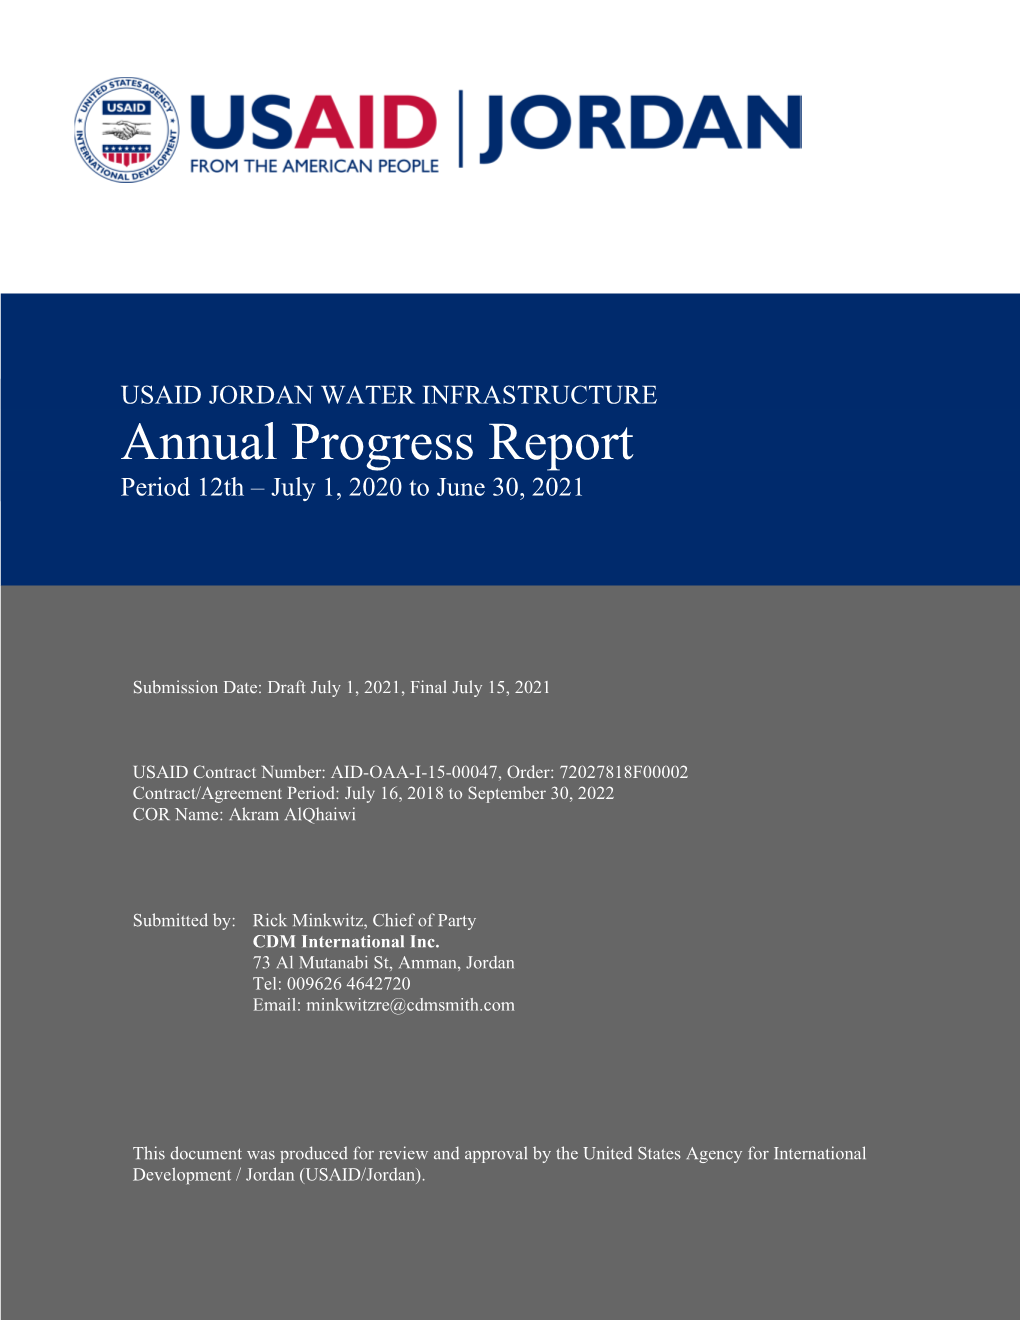 Annual Progress Report Period 12Th – July 1, 2020 to June 30, 2021